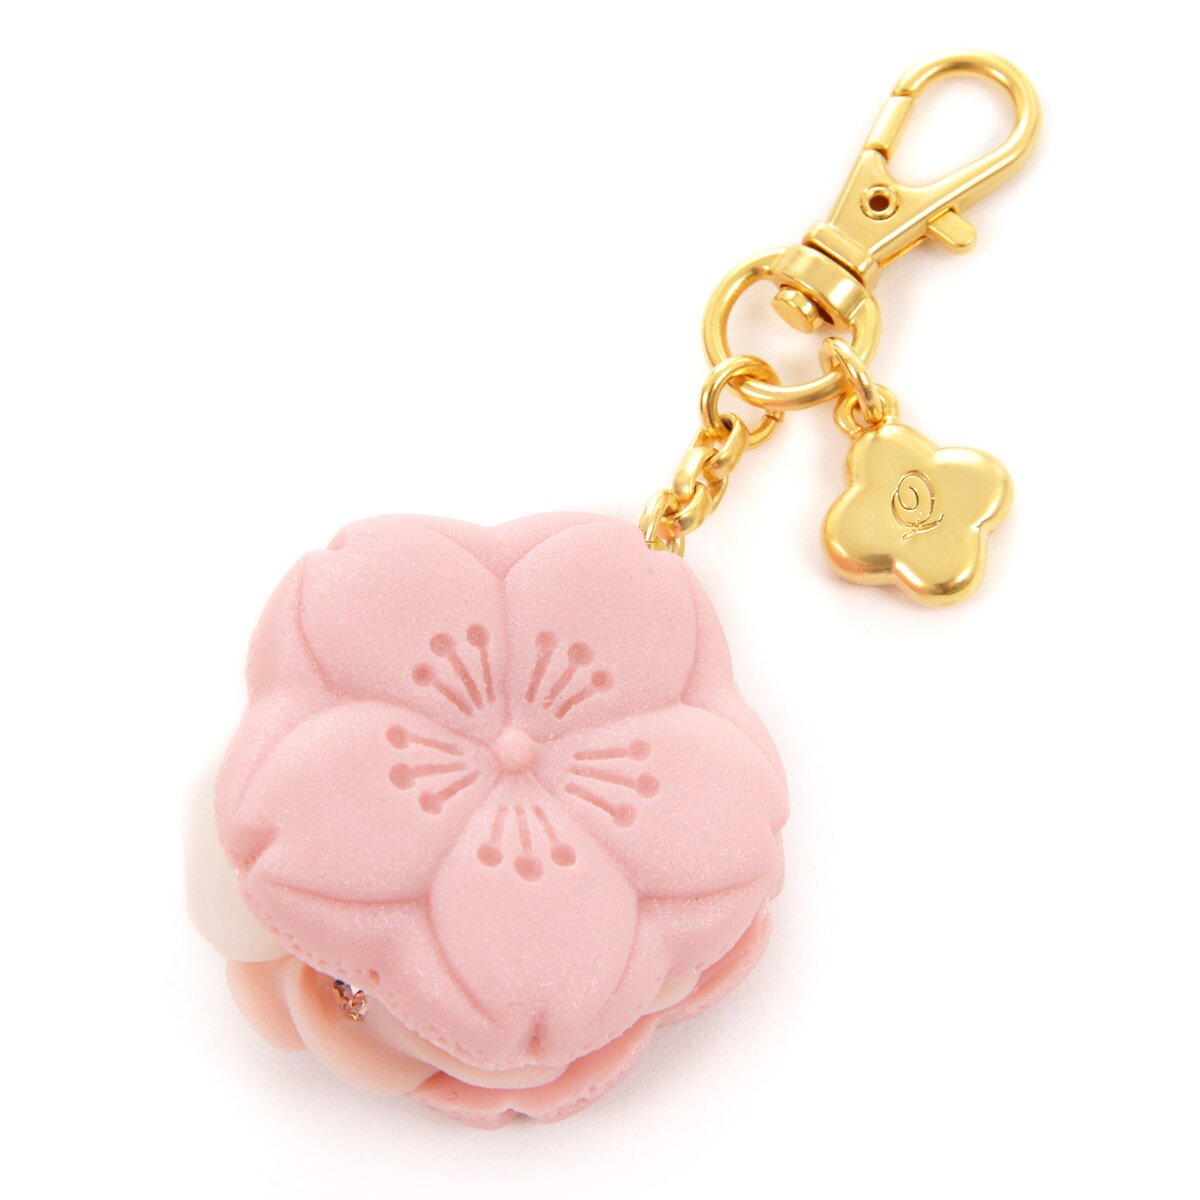 Japanese fan bag charm keychain pink sakura tassels purse accessories clasp